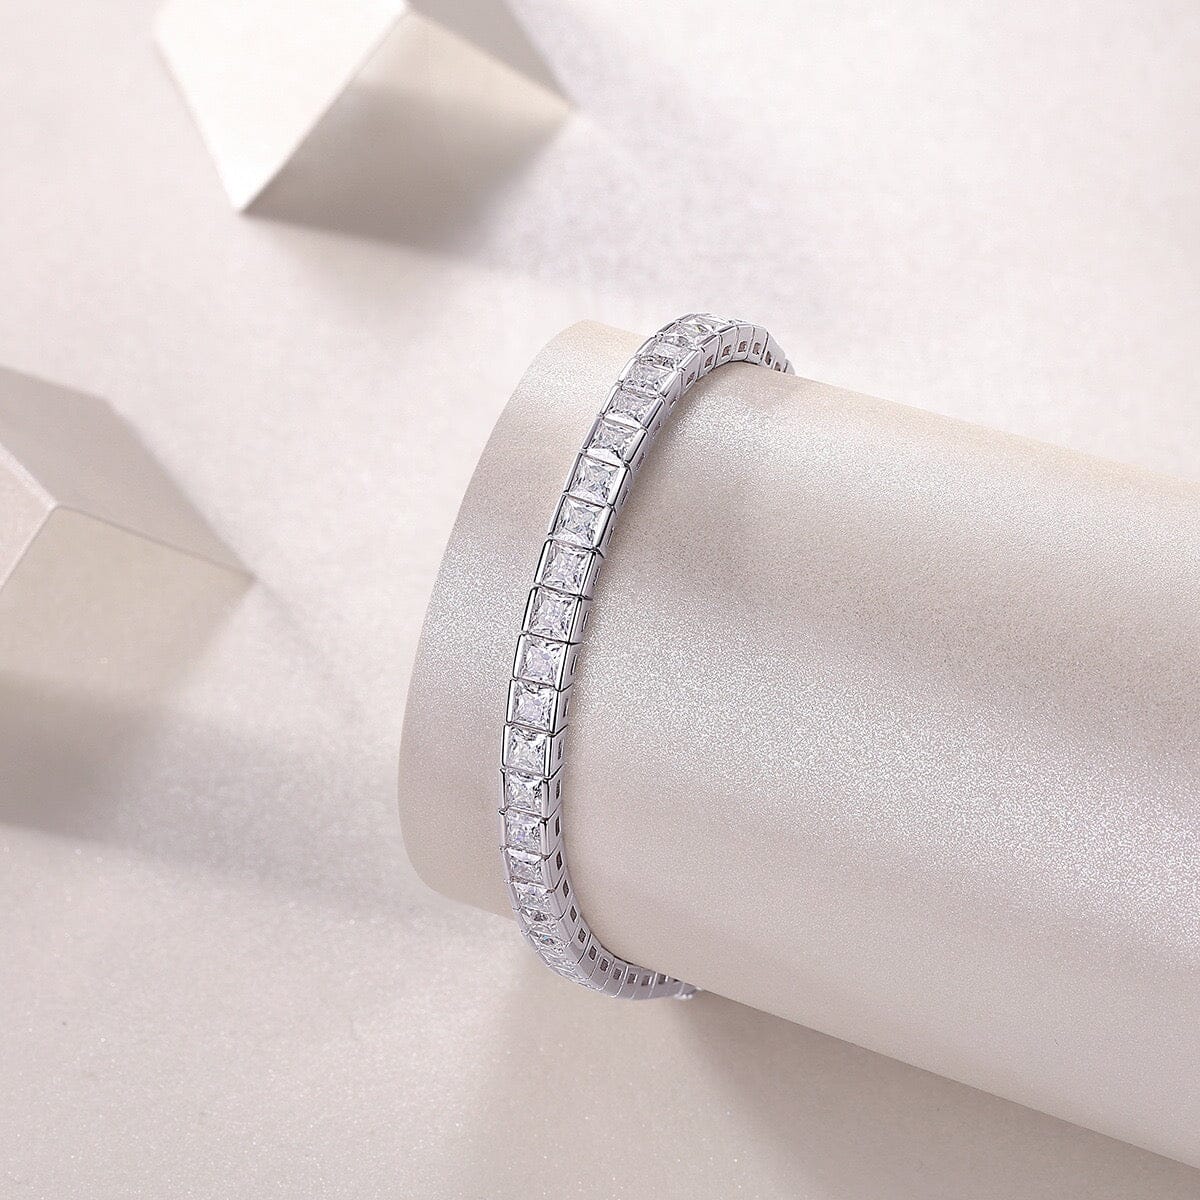 S925 Silver CZ Princess Cut Diamond Tennis Bracelet - 3mm Bracelets 